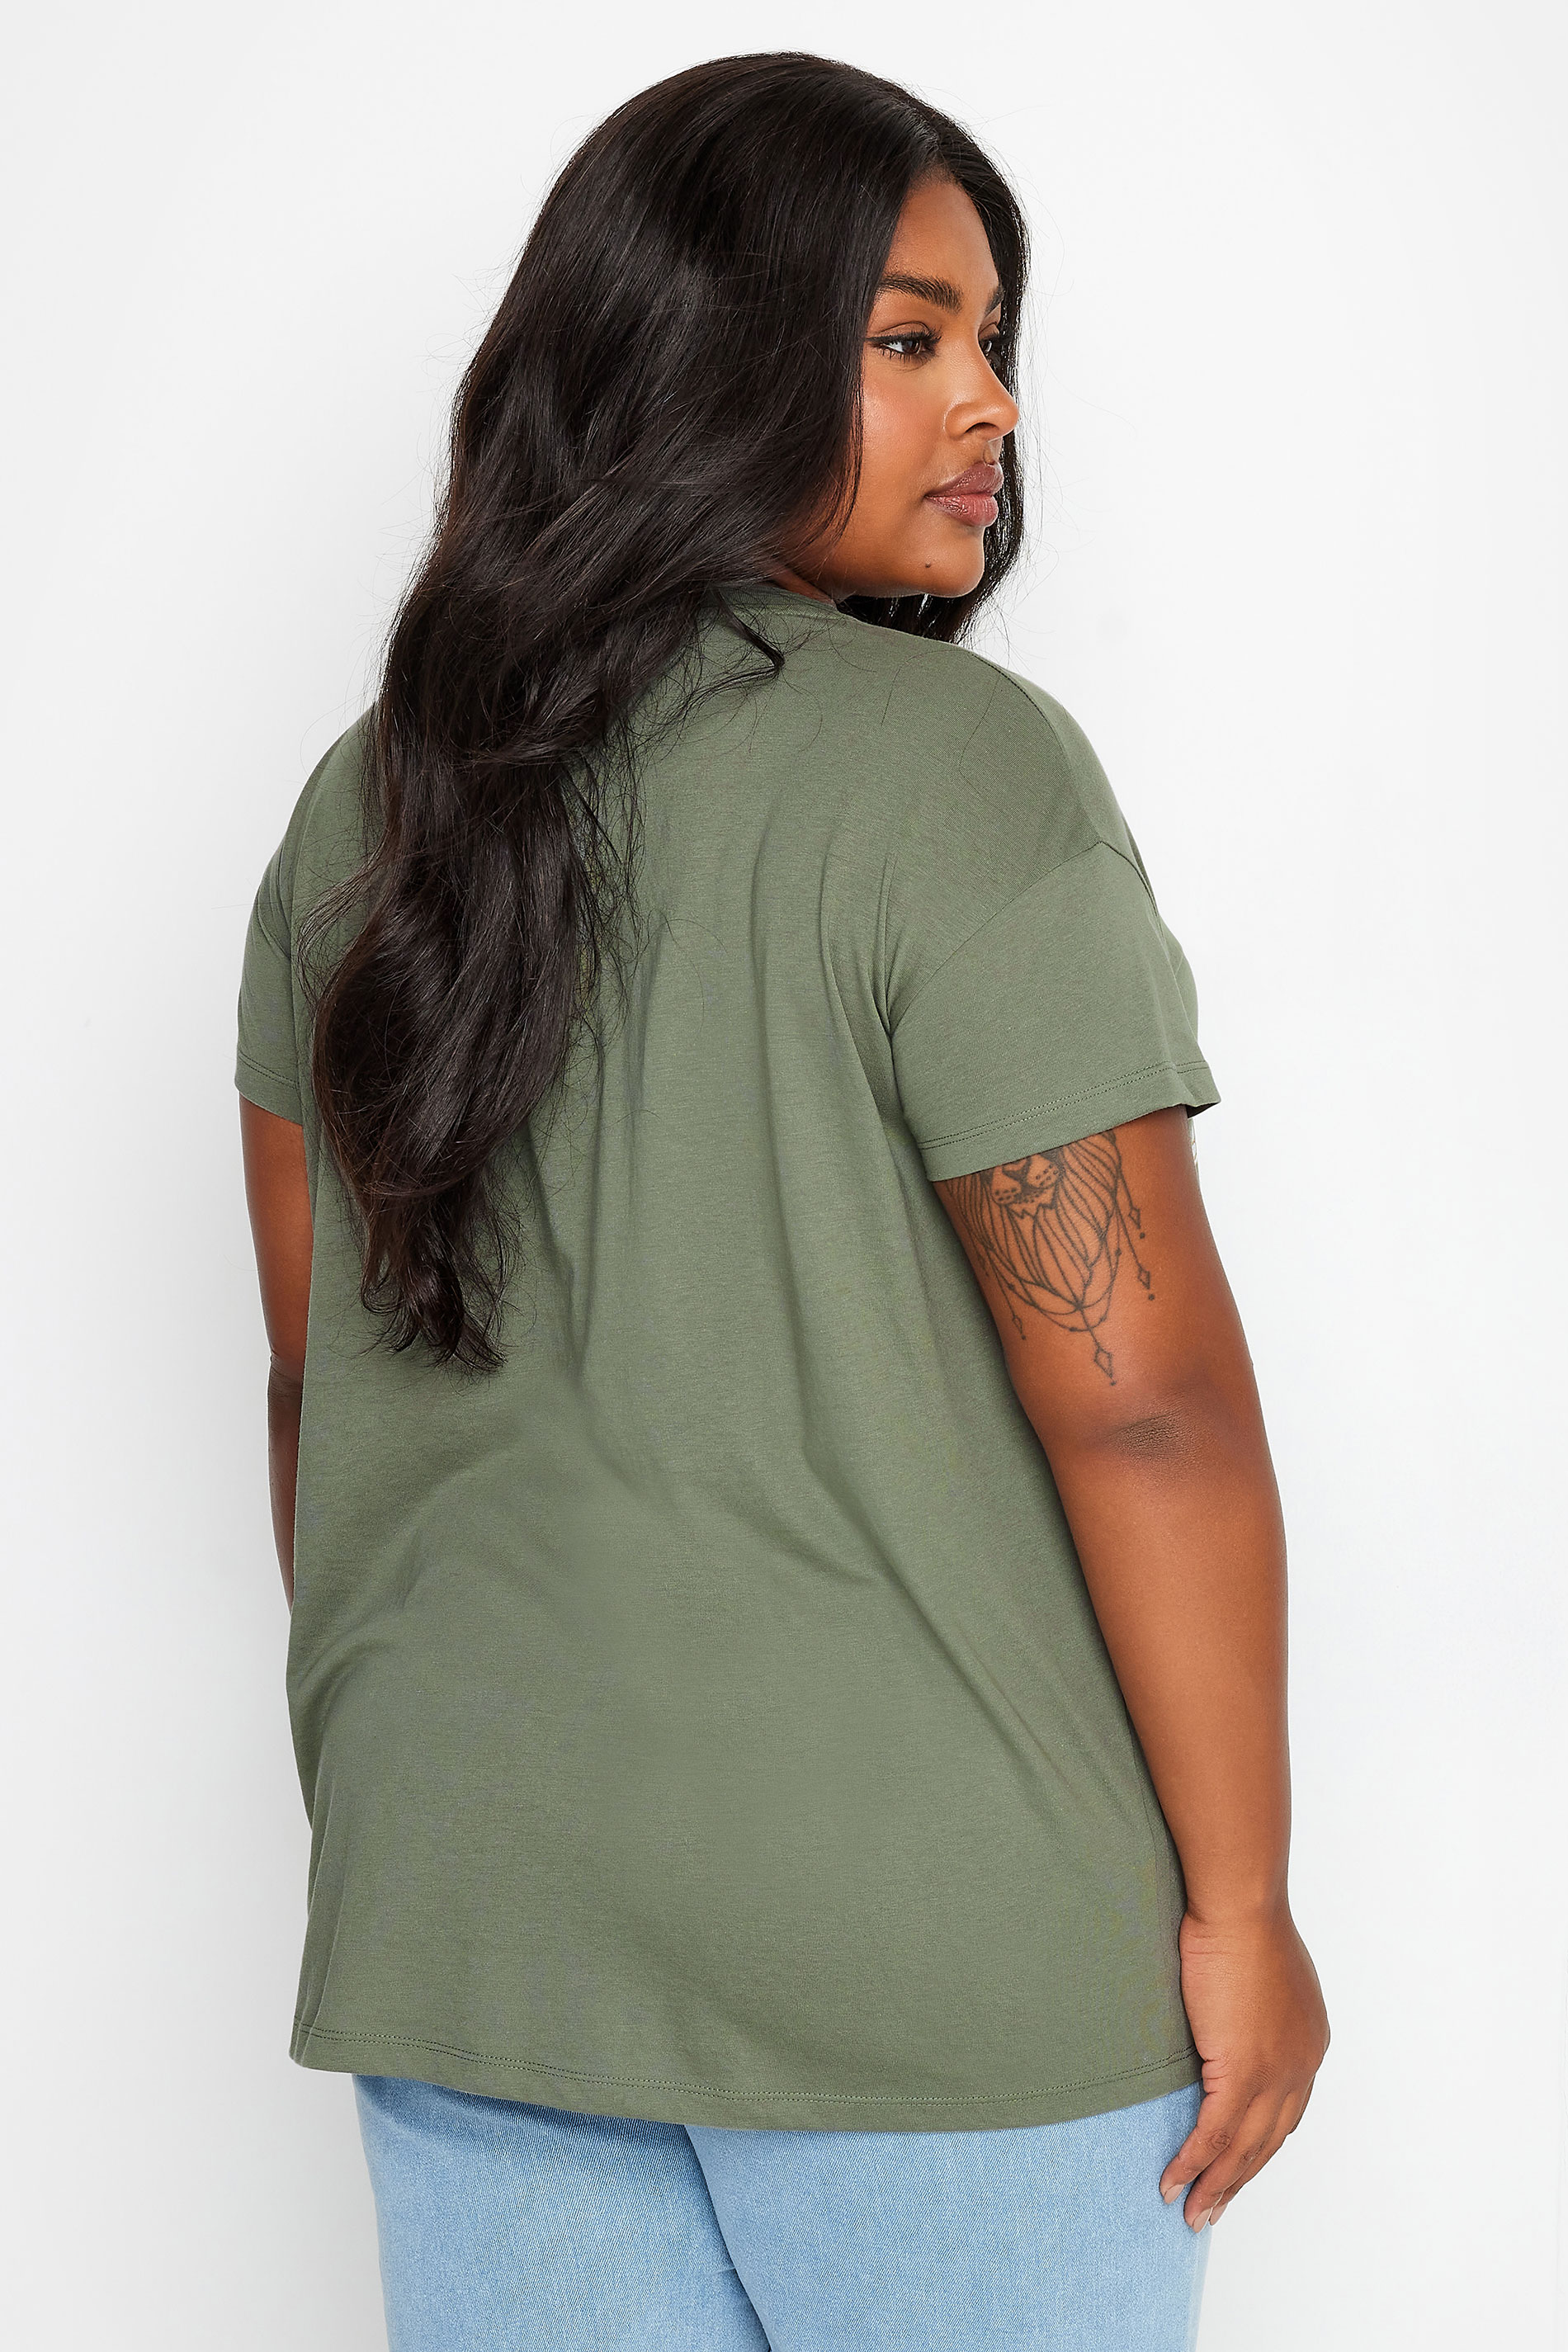 YOURS Plus Size Khaki Green 'Mystic Dreams' Slogan T-Shirt | Yours Clothing 3